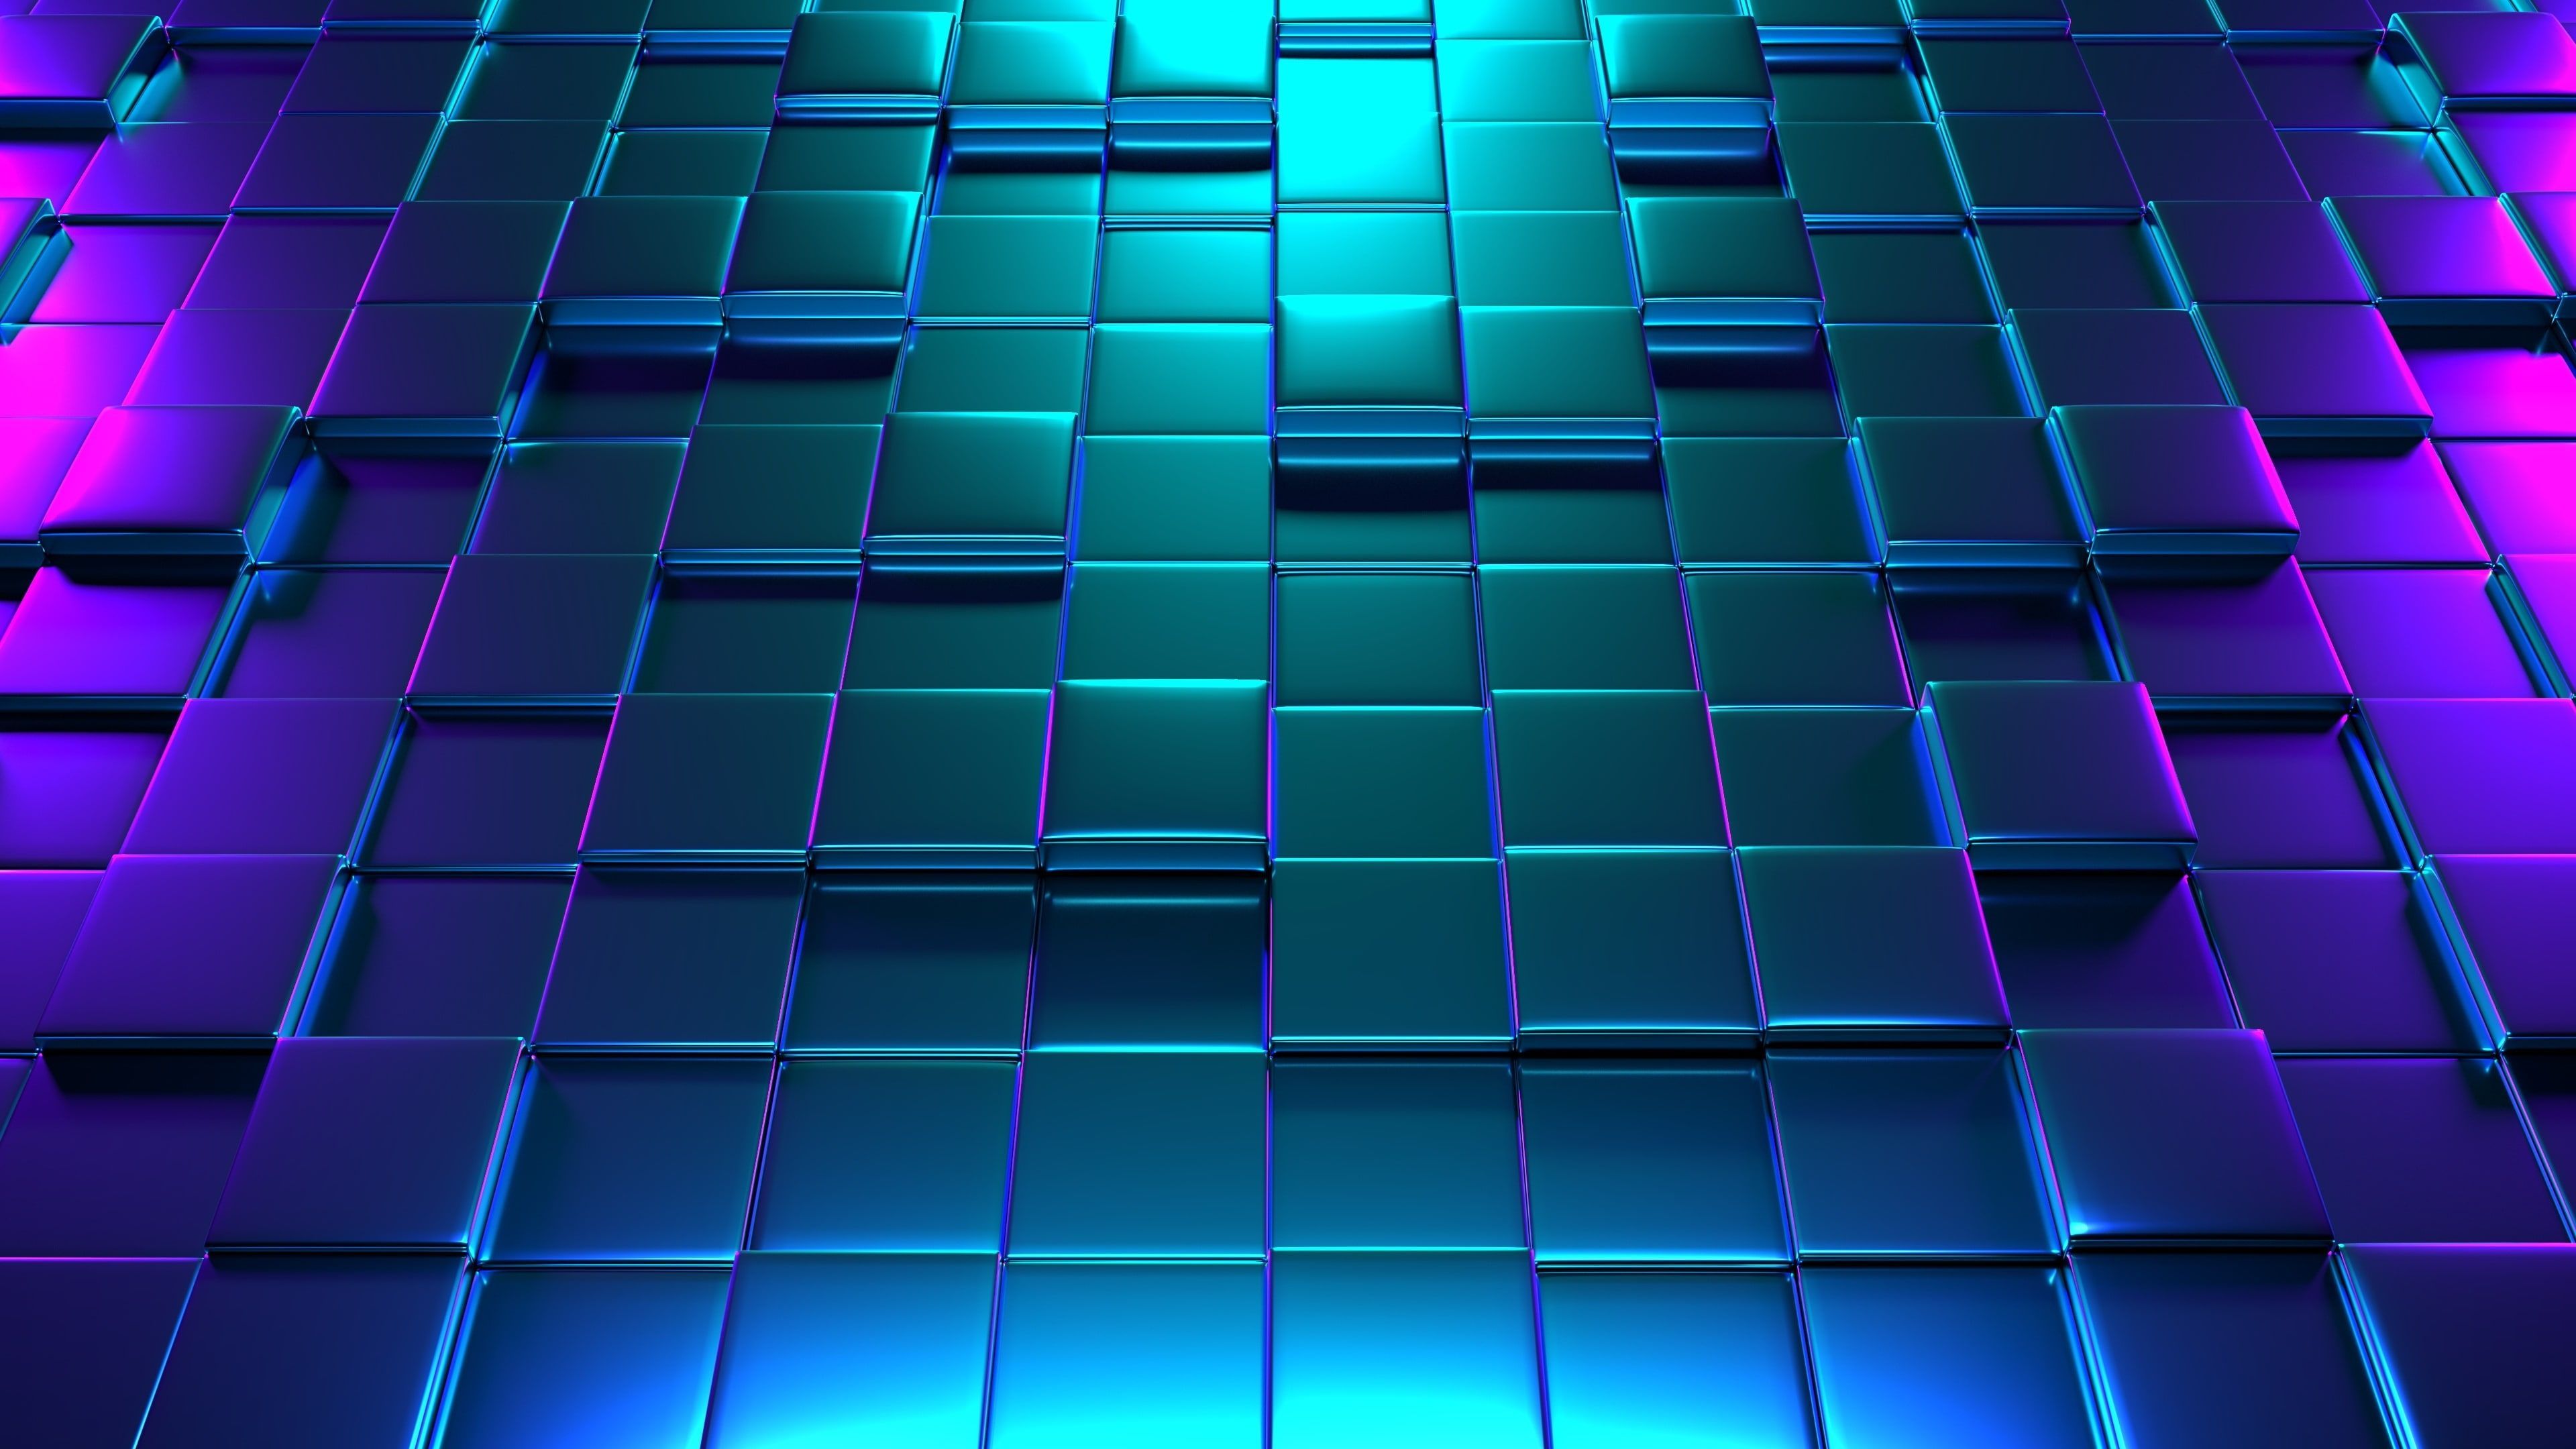 3D #blue #cube #symmetry digital art #pattern #glow #line #shine #square # neon #structure #angle K #w. Wallpaper iphone neon, Neon wallpaper, Free 3D wallpaper